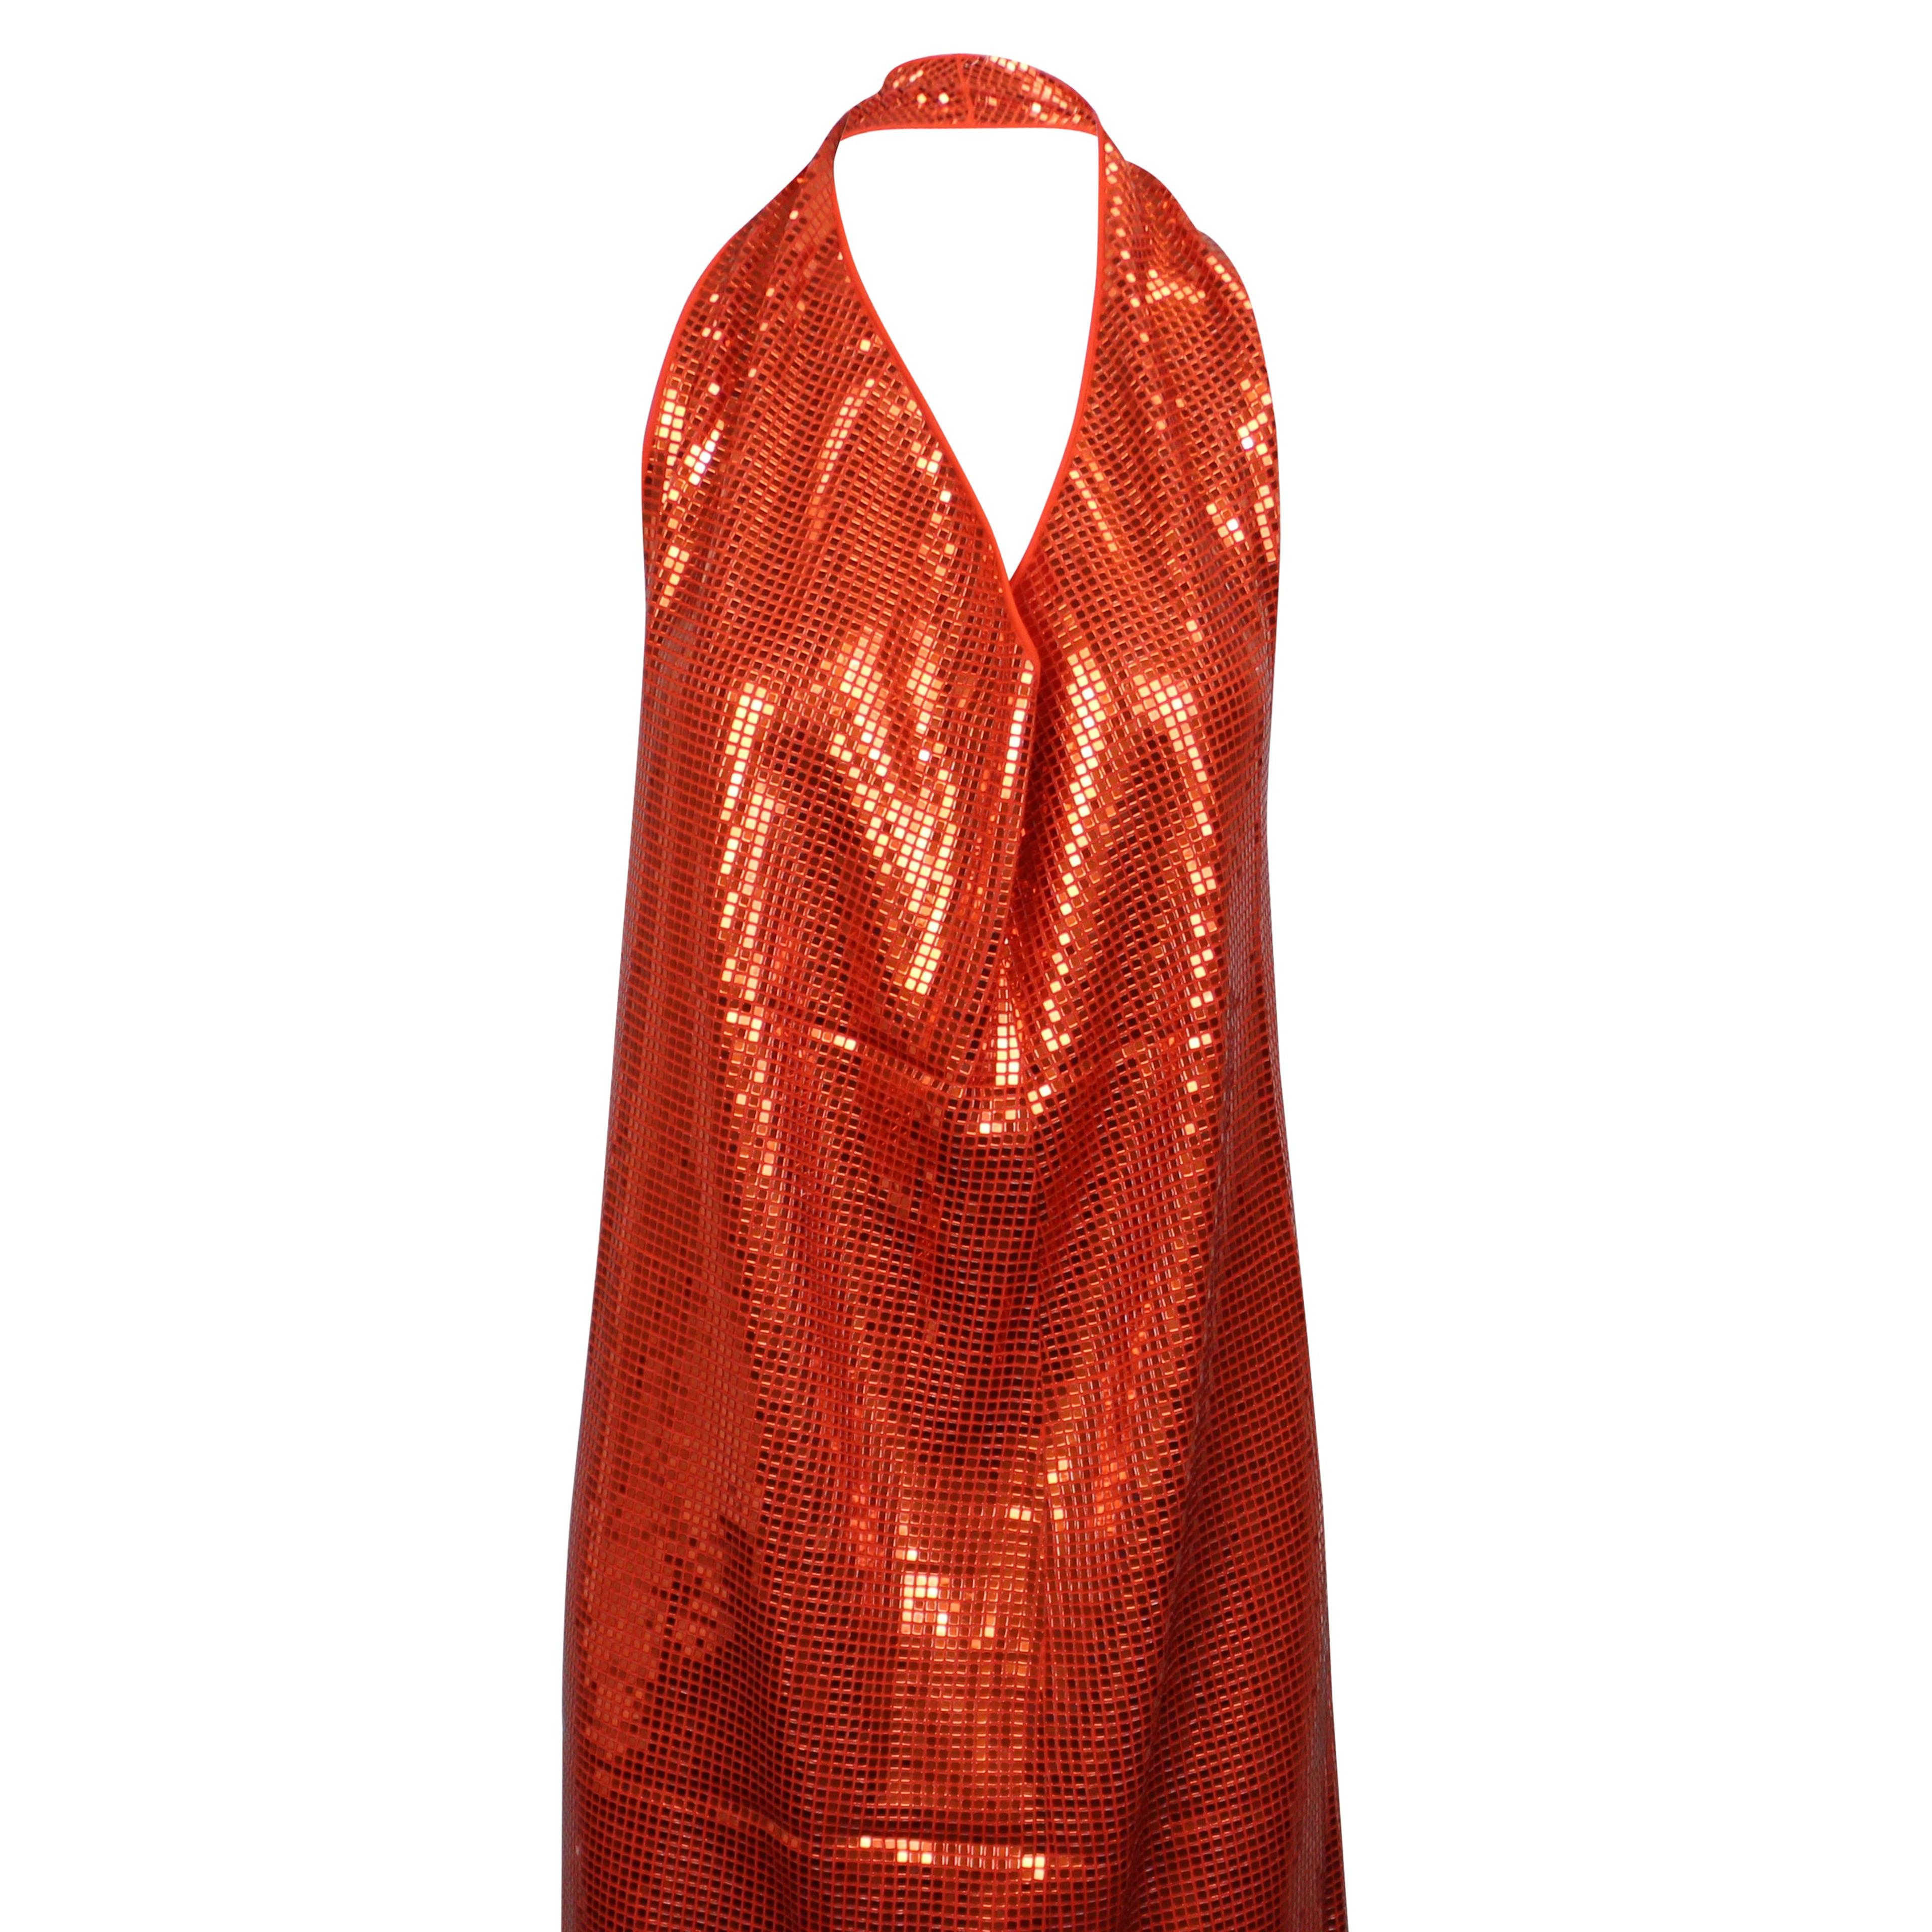 Alternate View 2 of Orange Drape Halter Sequin Mid Dress